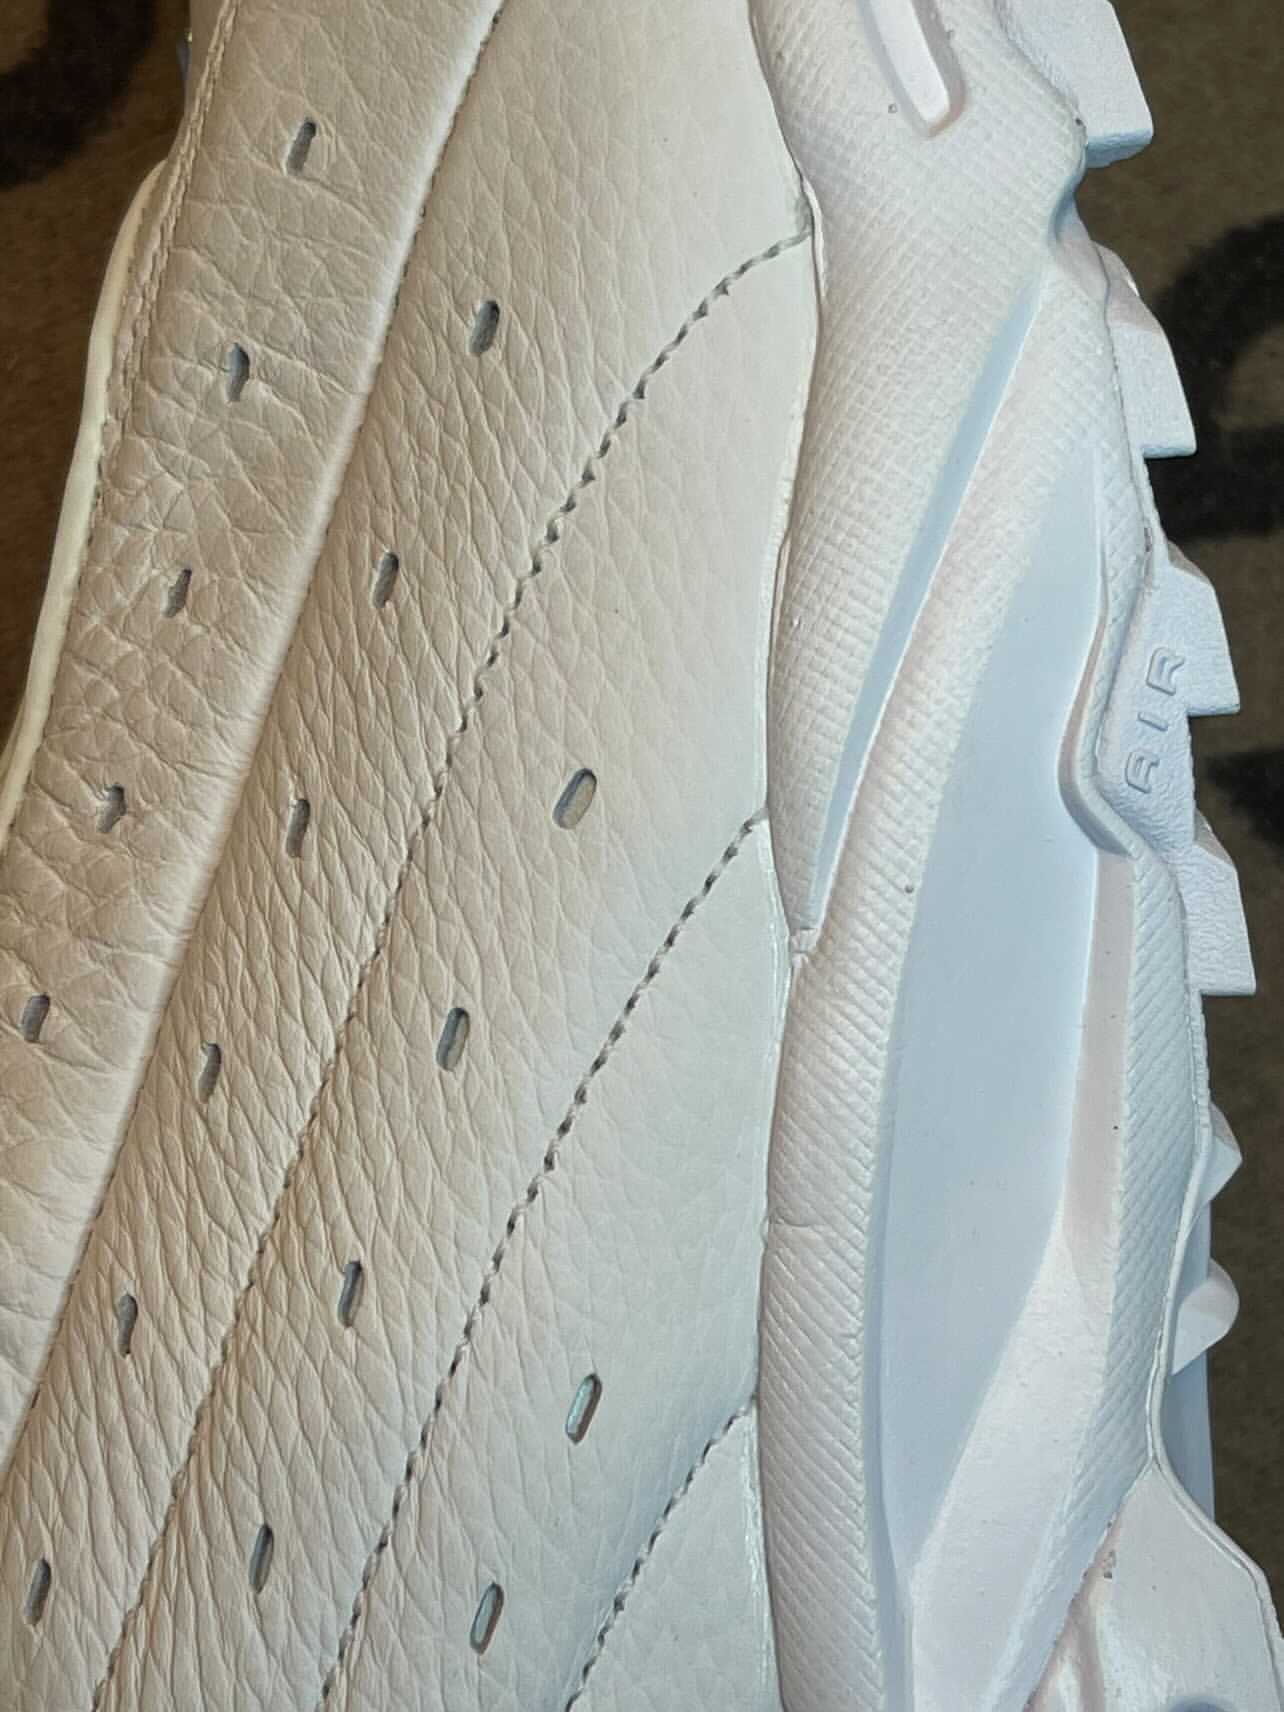 Drake NOCTA Nike Hot Step Air Terra White DH4692-100 Release Date